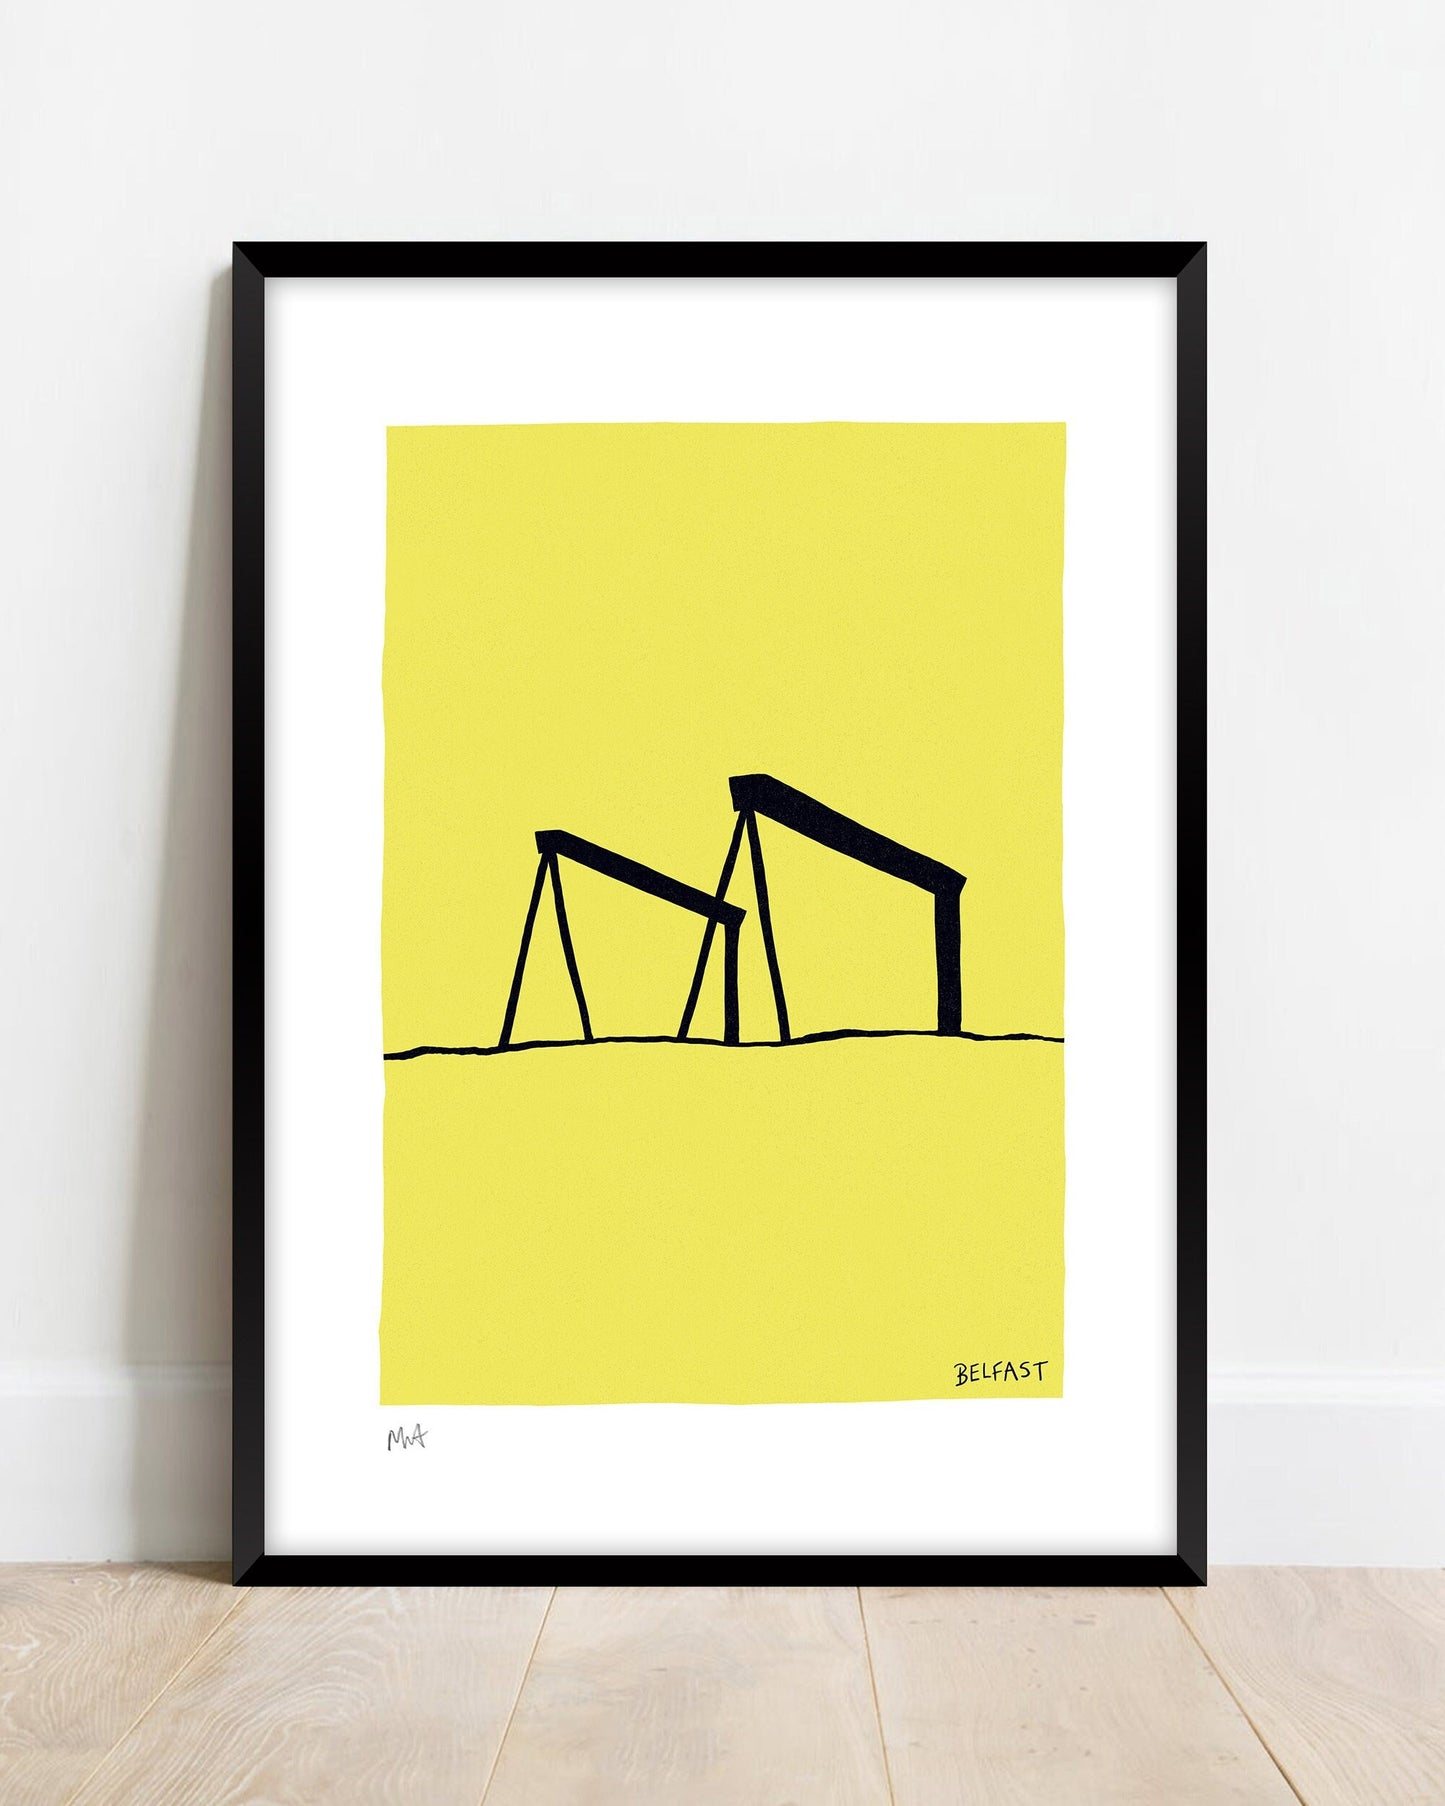 BELFAST, Northern Ireland – A4 / A3 print, yellow